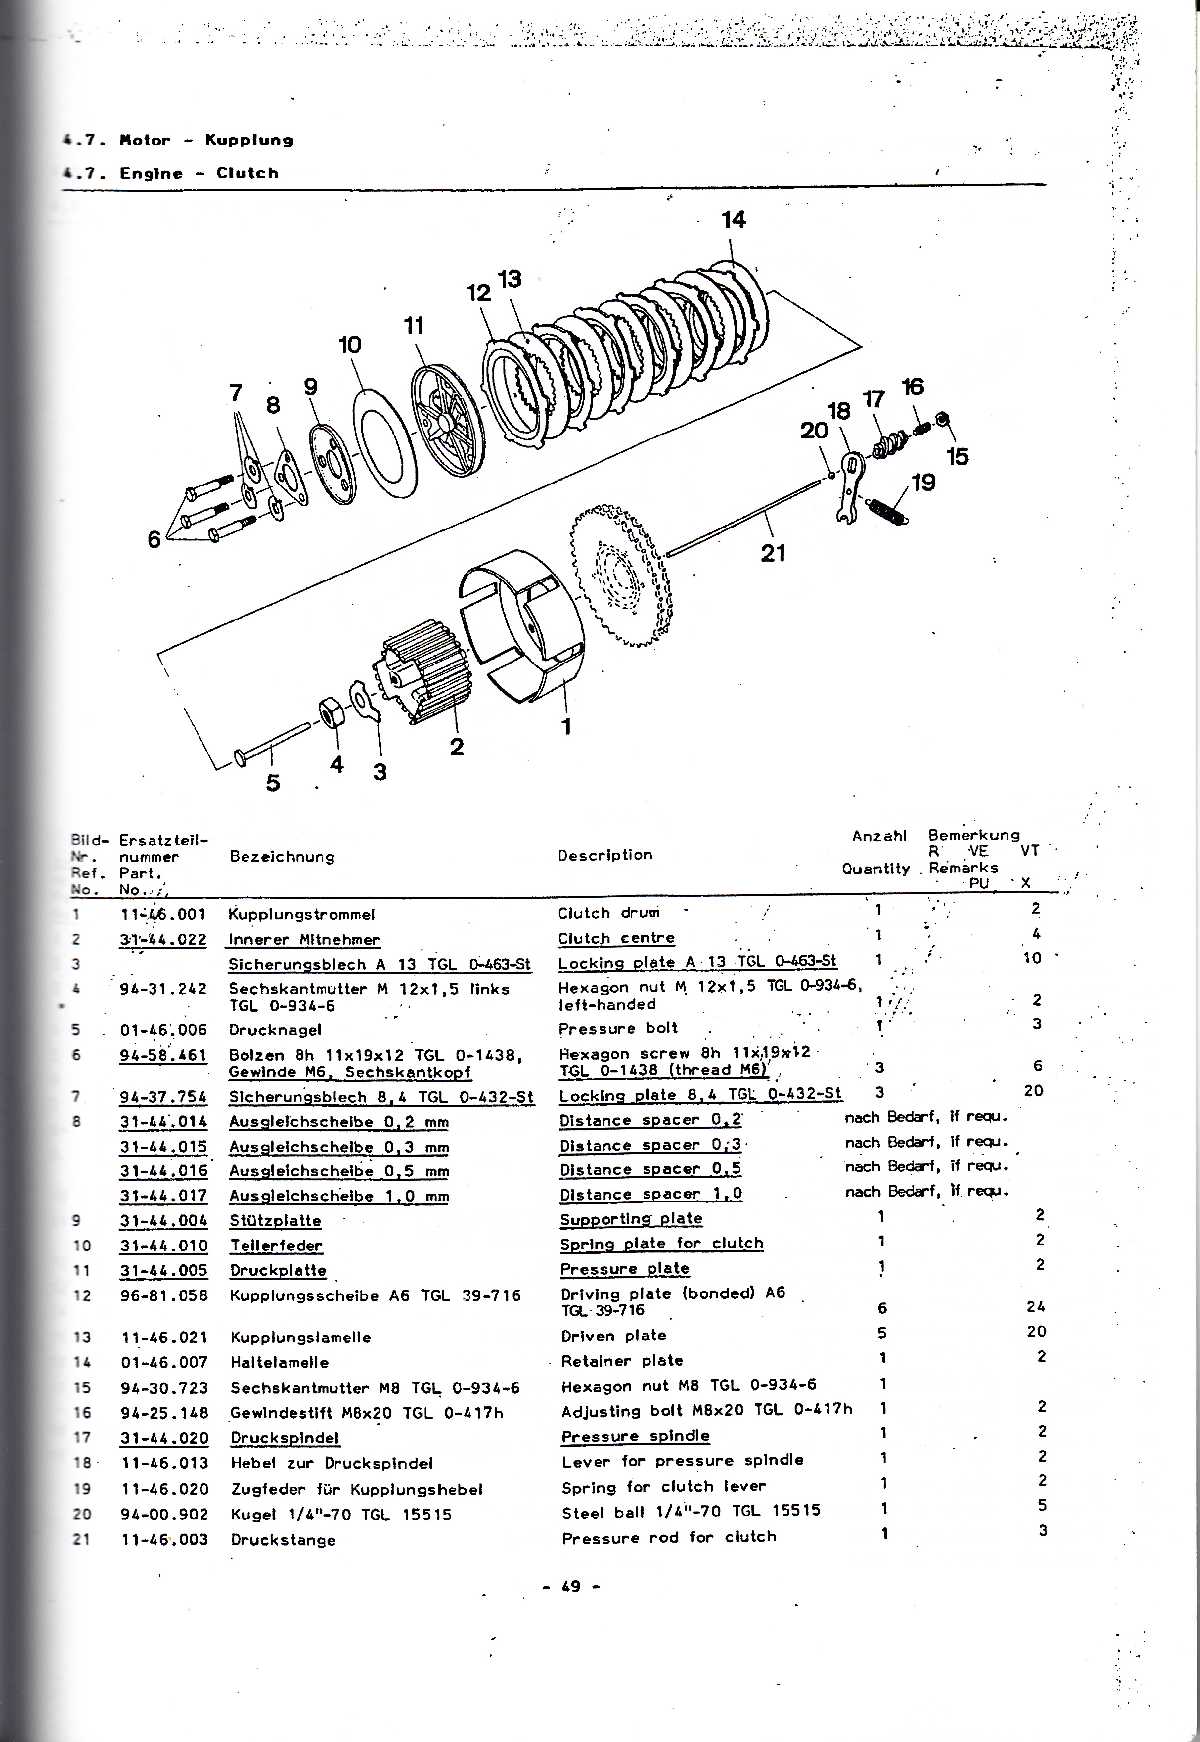 Katalog MZ 150 ETZ, MZ 125 ETZ - 4.7. Motor - Kupplung